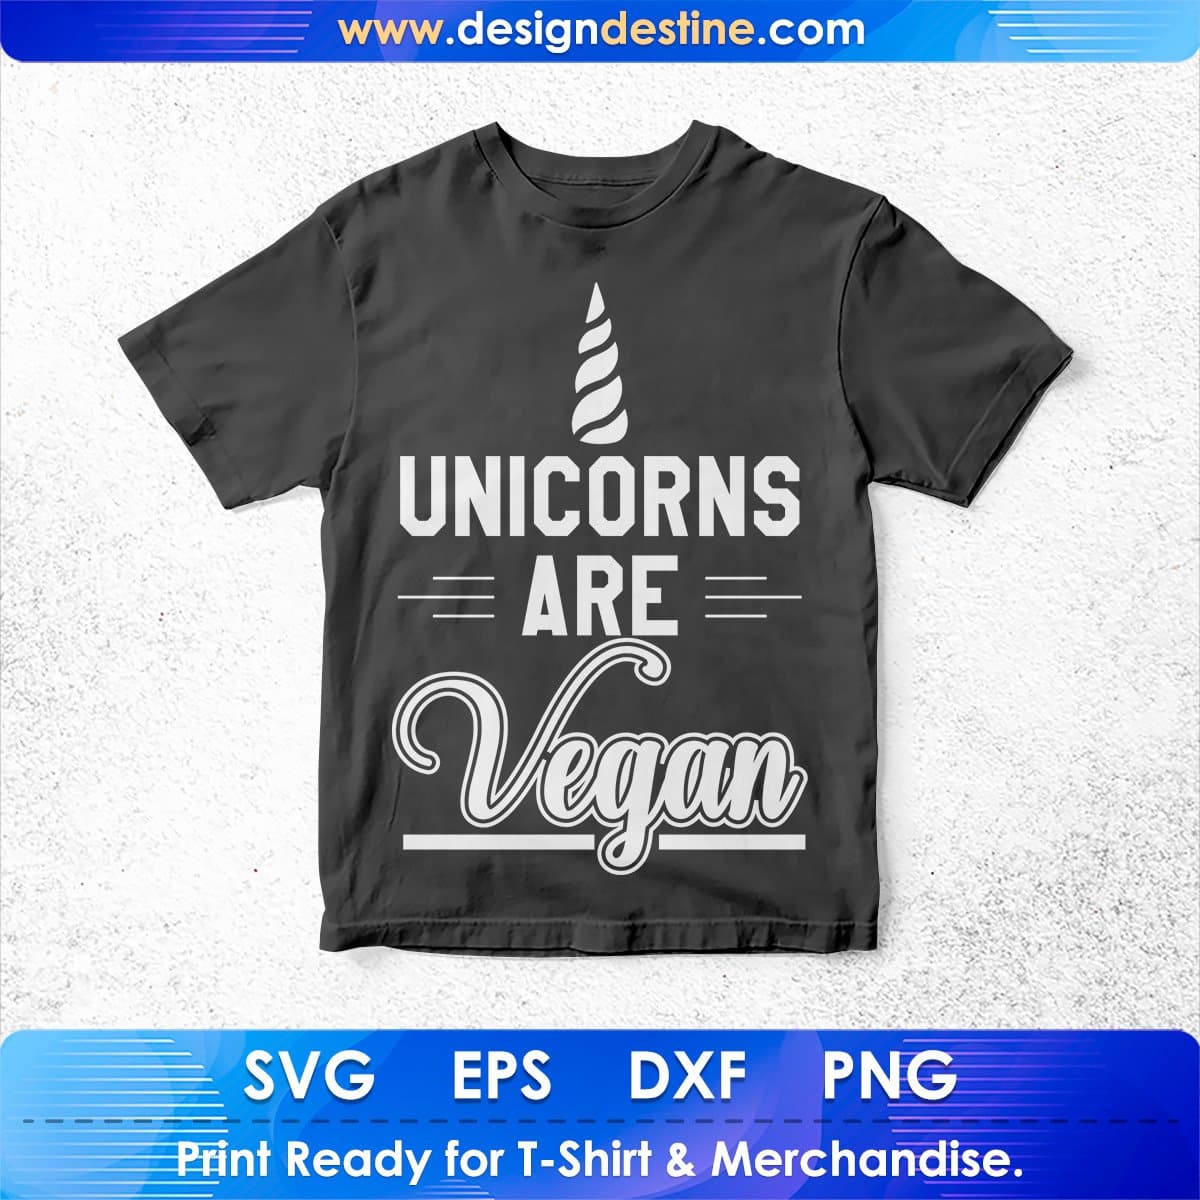 Unicorns Are Vegan T shirt Design In Png Svg Cutting Printable Files